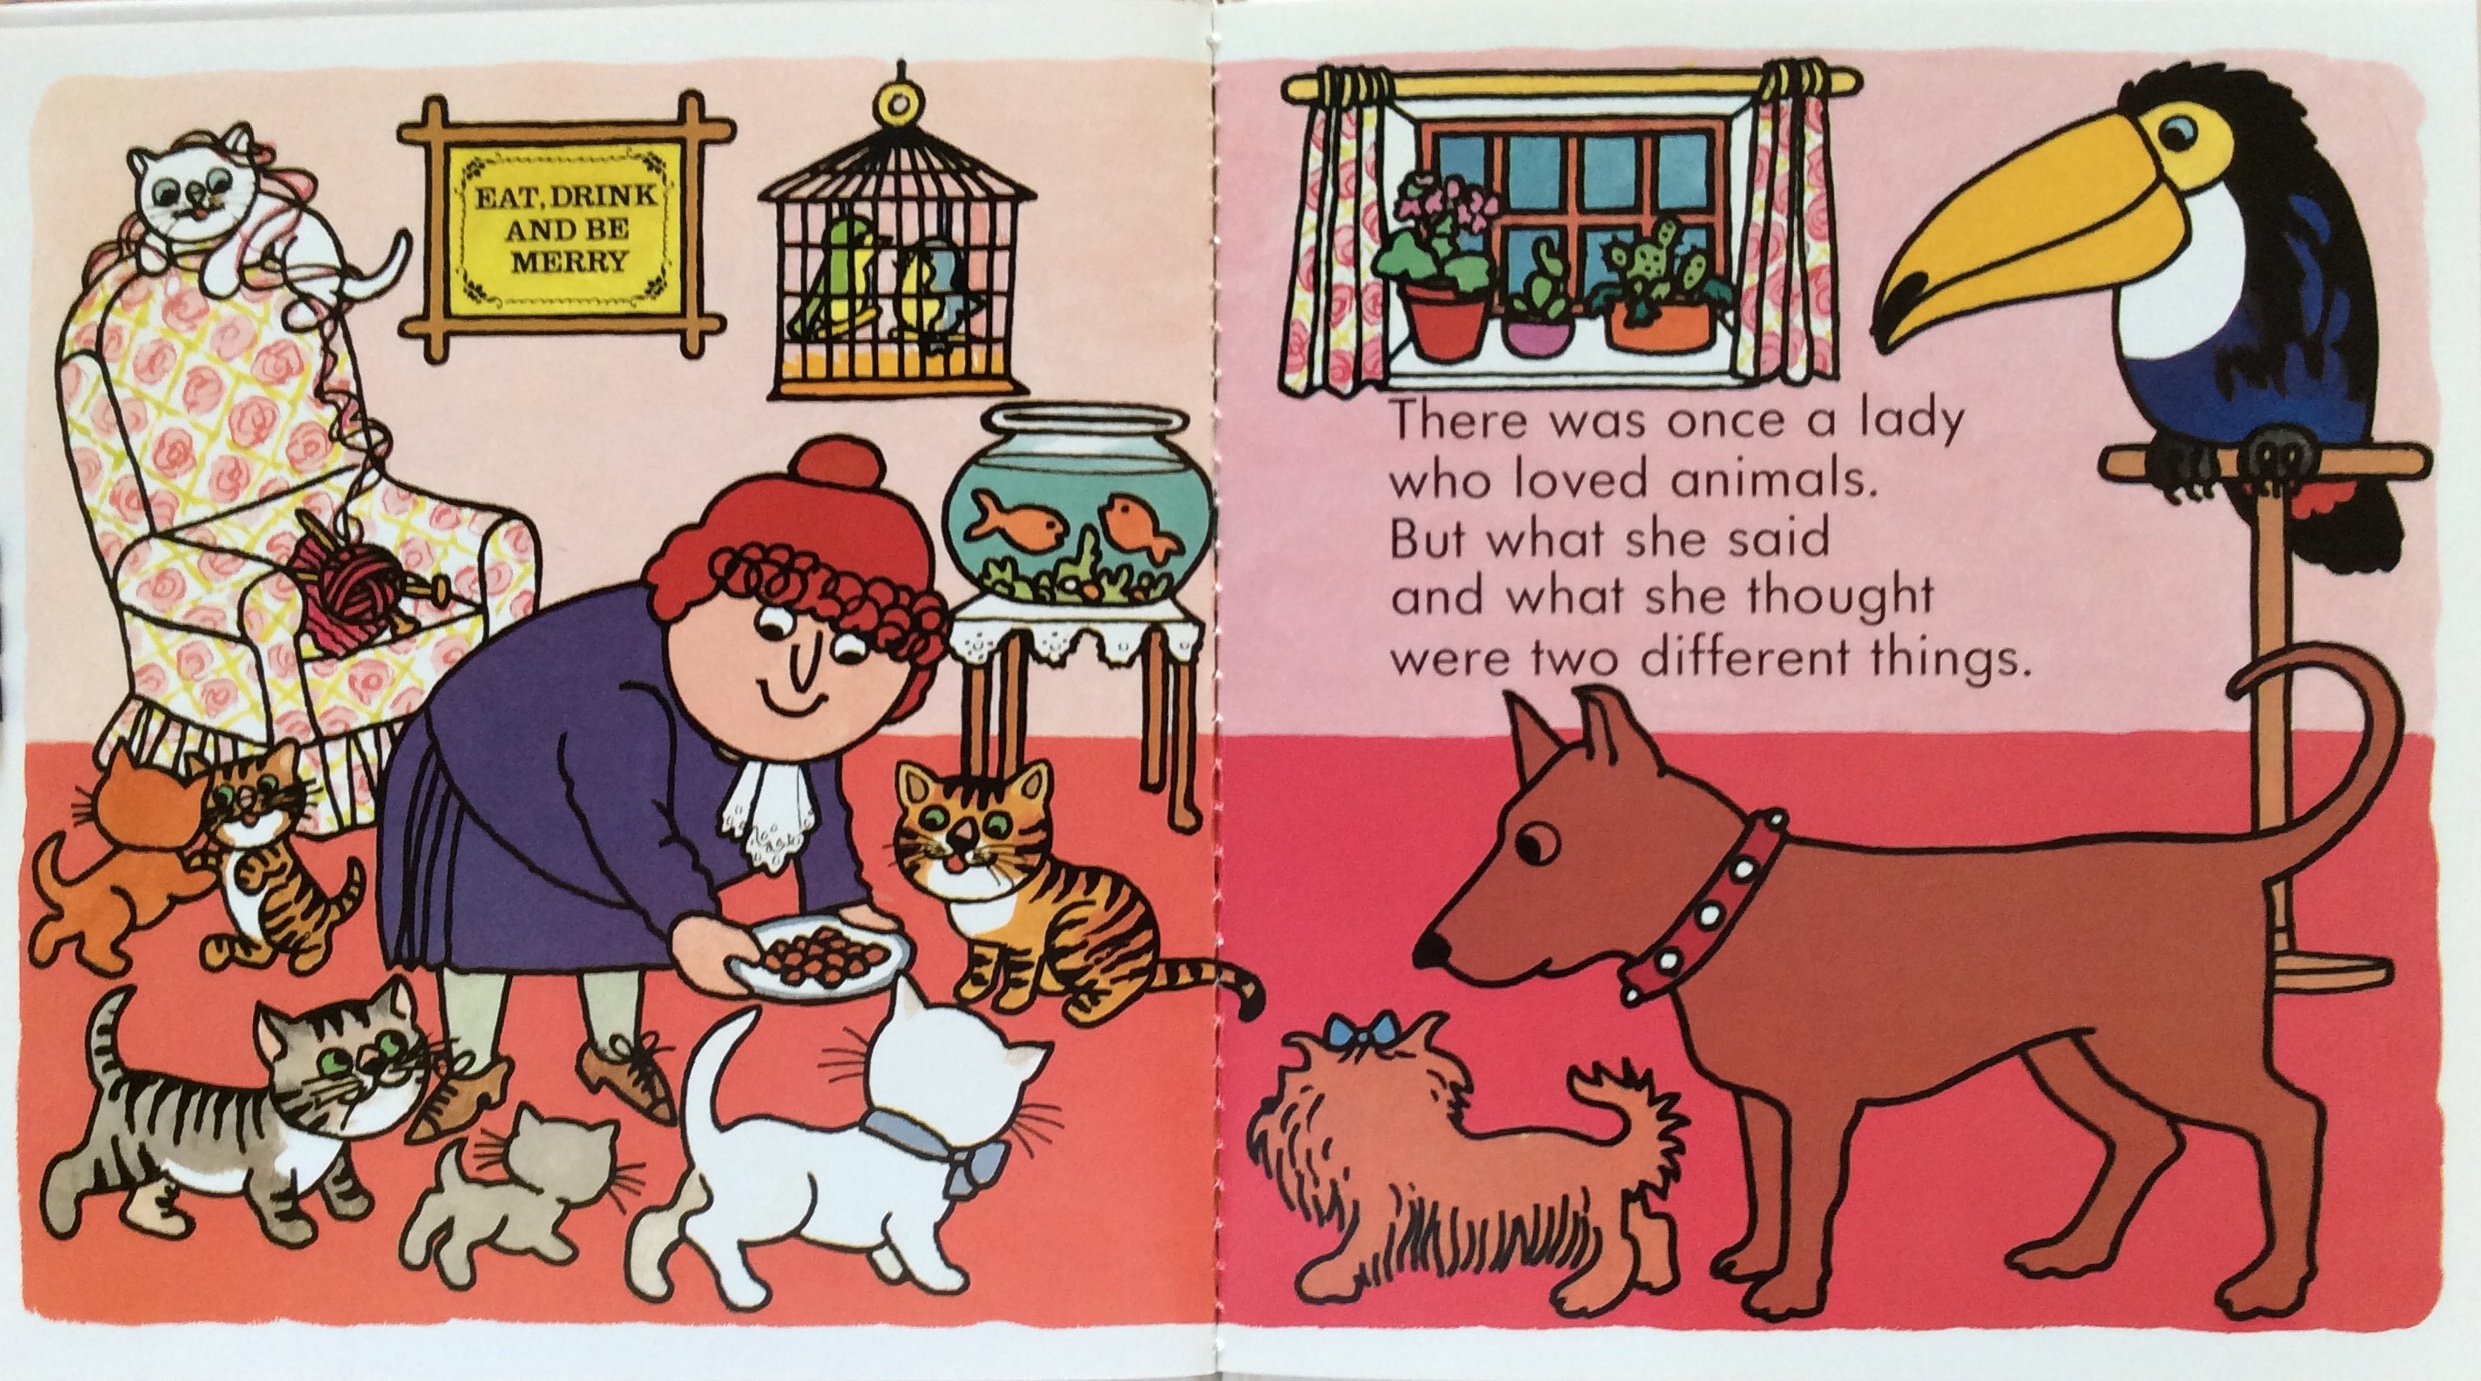 The Lady Who loved Animals, di e illustrato da Pam Adams - 1990, Child’s Play (International) Ltd., Londra, UK